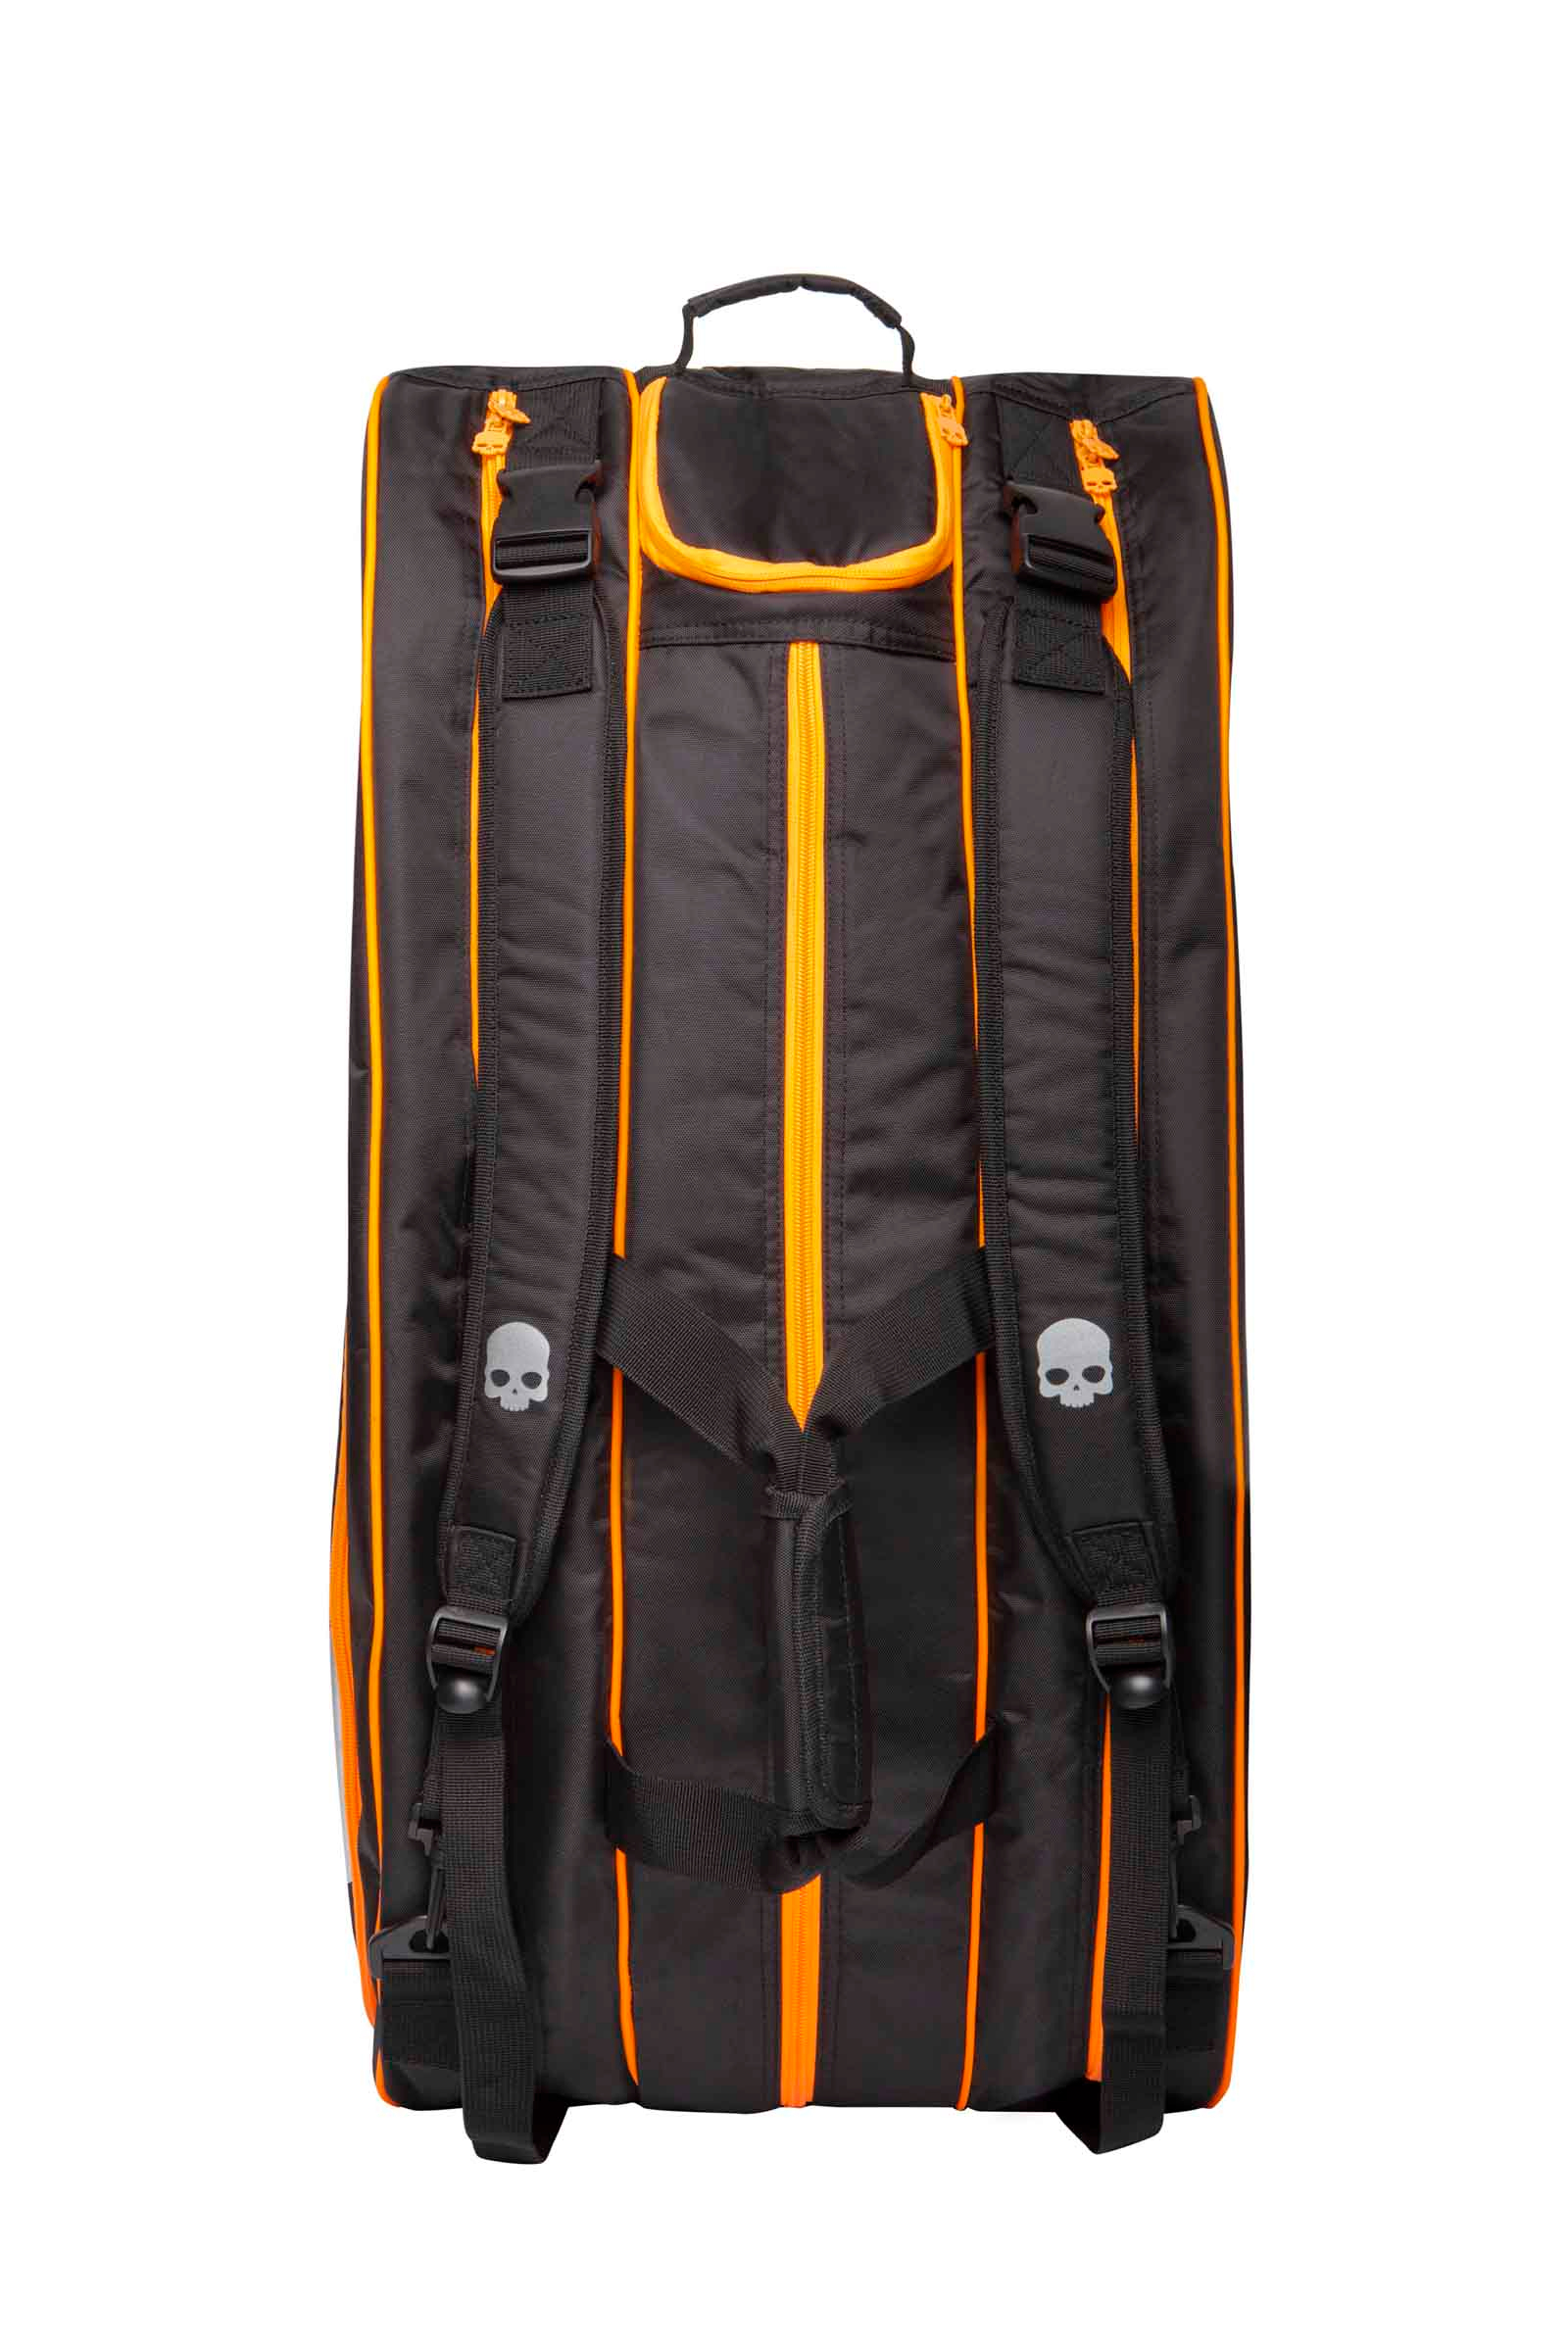 CHROME BAG PRINCE BY HYDROGEN - BLACK,ORANGE - Hydrogen - Luxury Sportwear